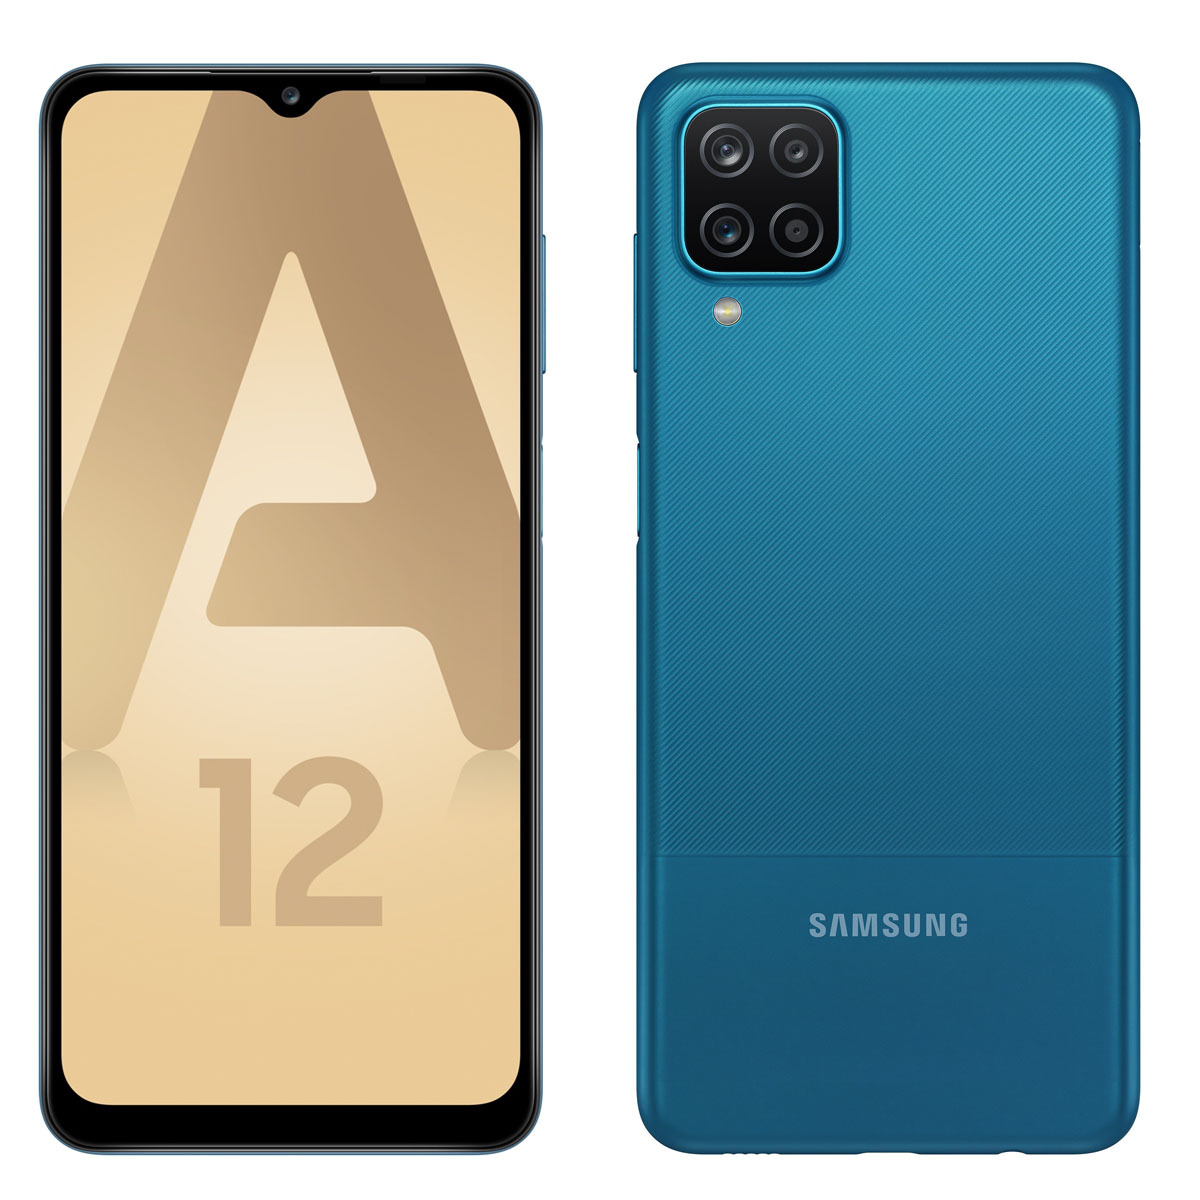 Smartphone Android Samsung Galaxy A12 - 64 Go - Bleu